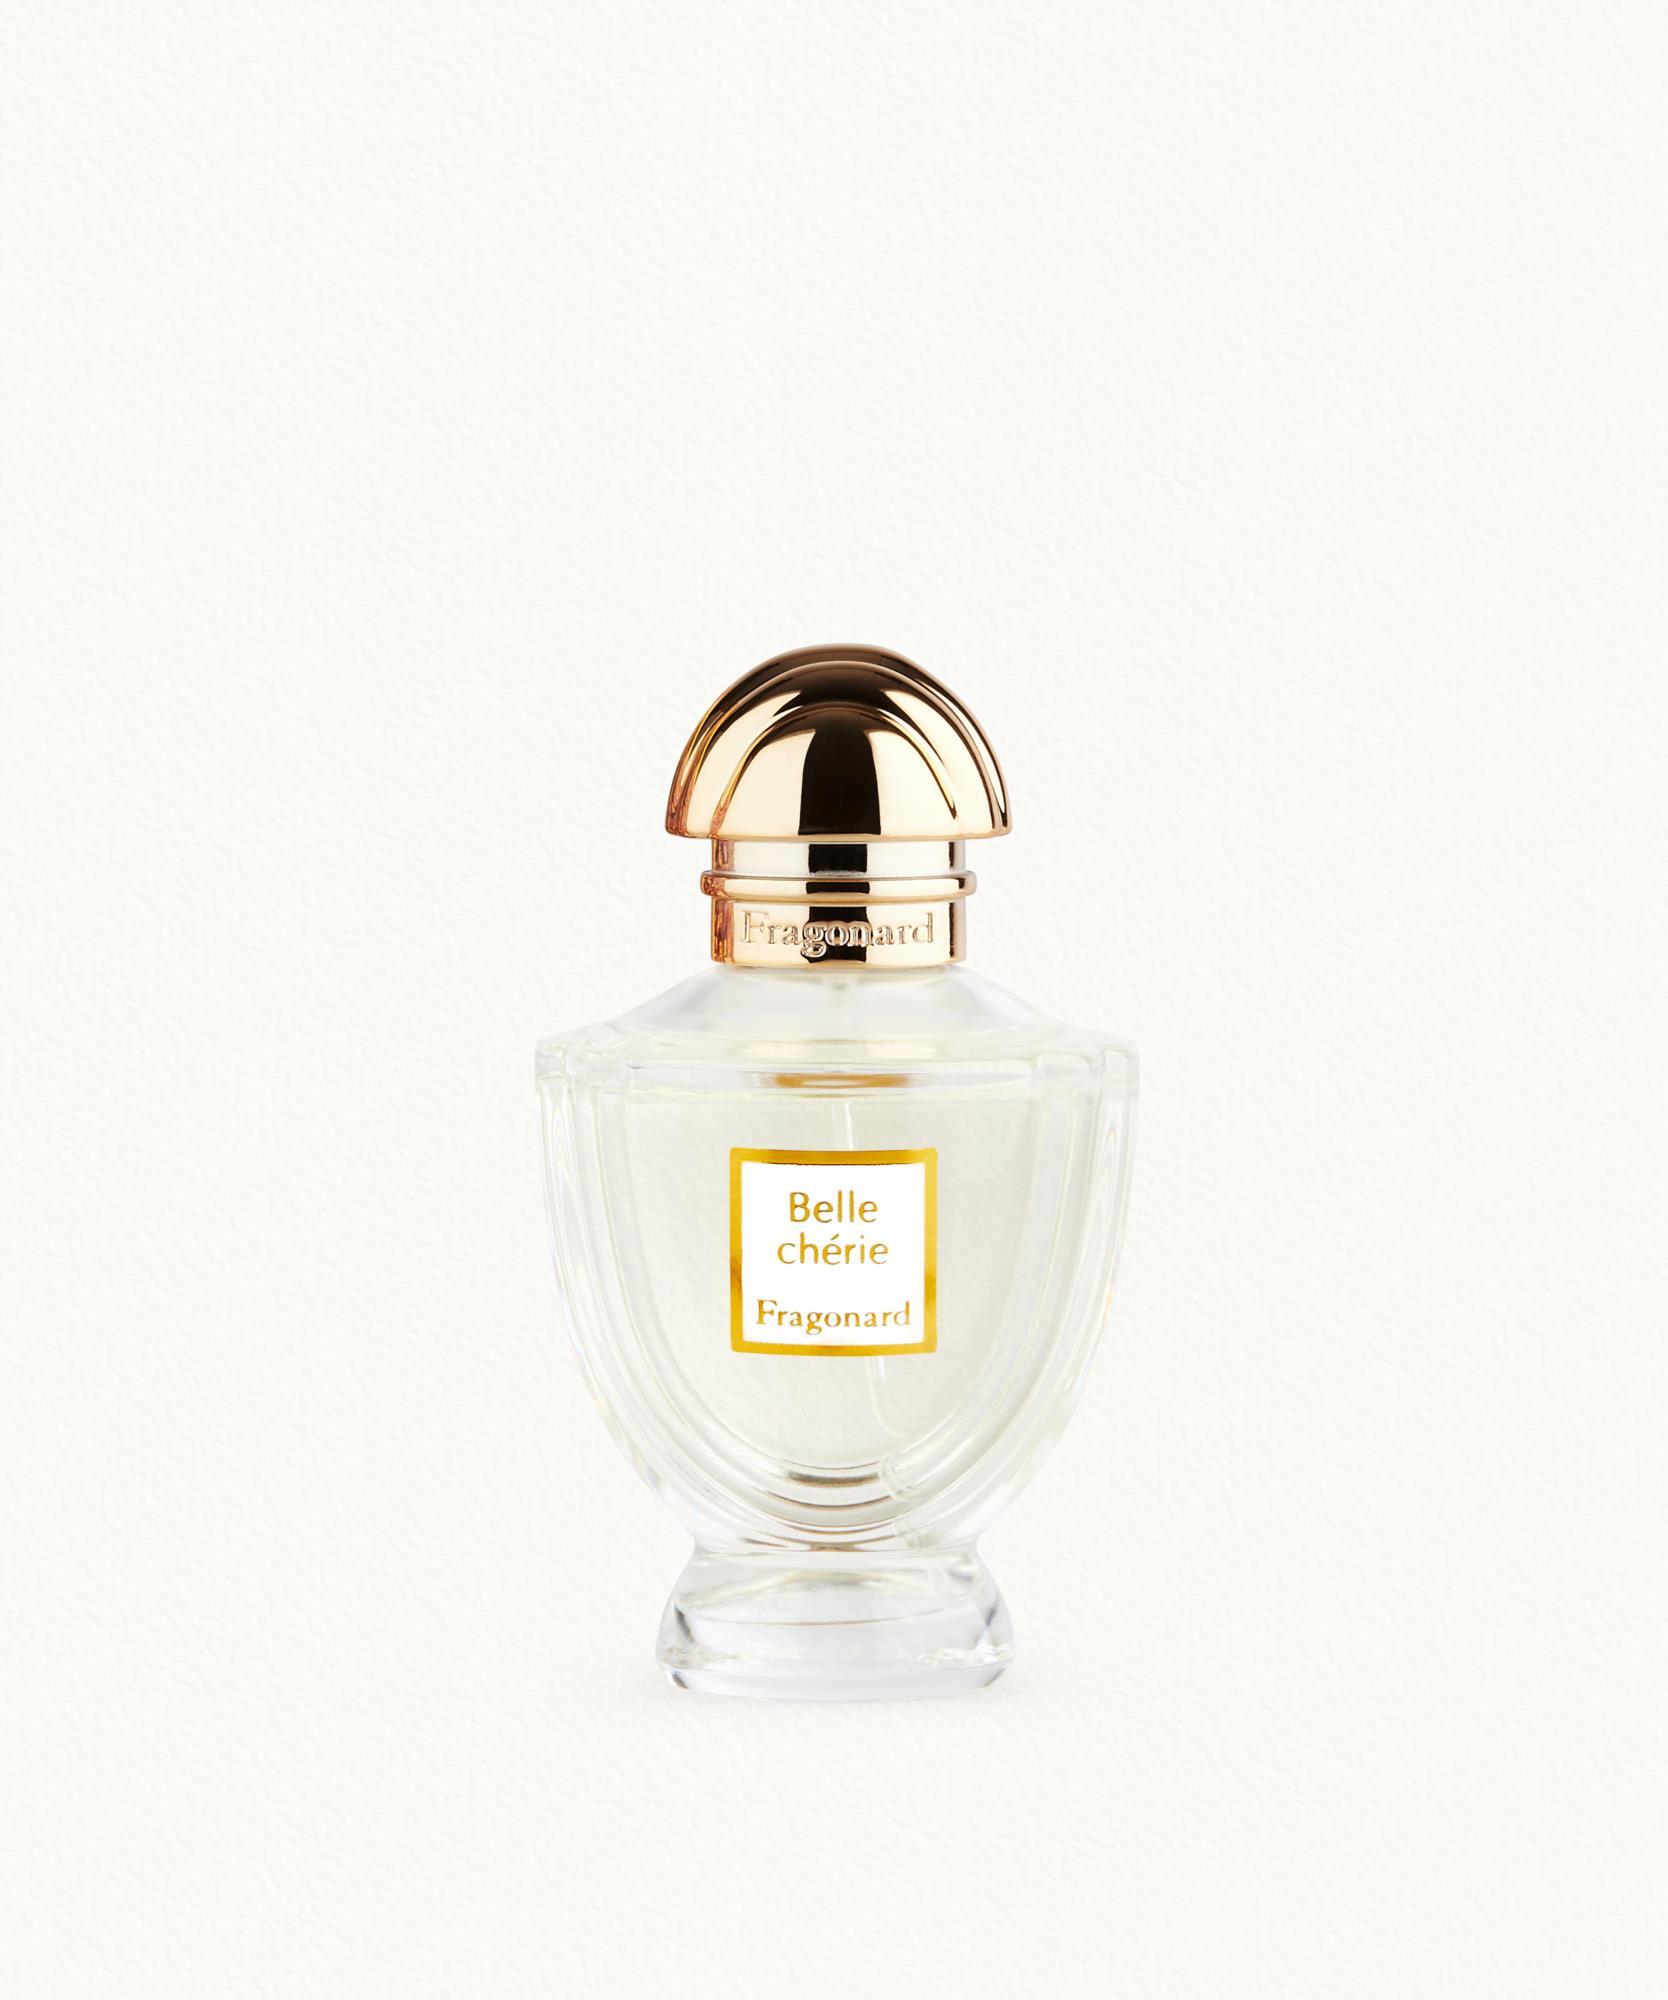 Belle Chérie Eau de parfum Fragonard - $ 87.00